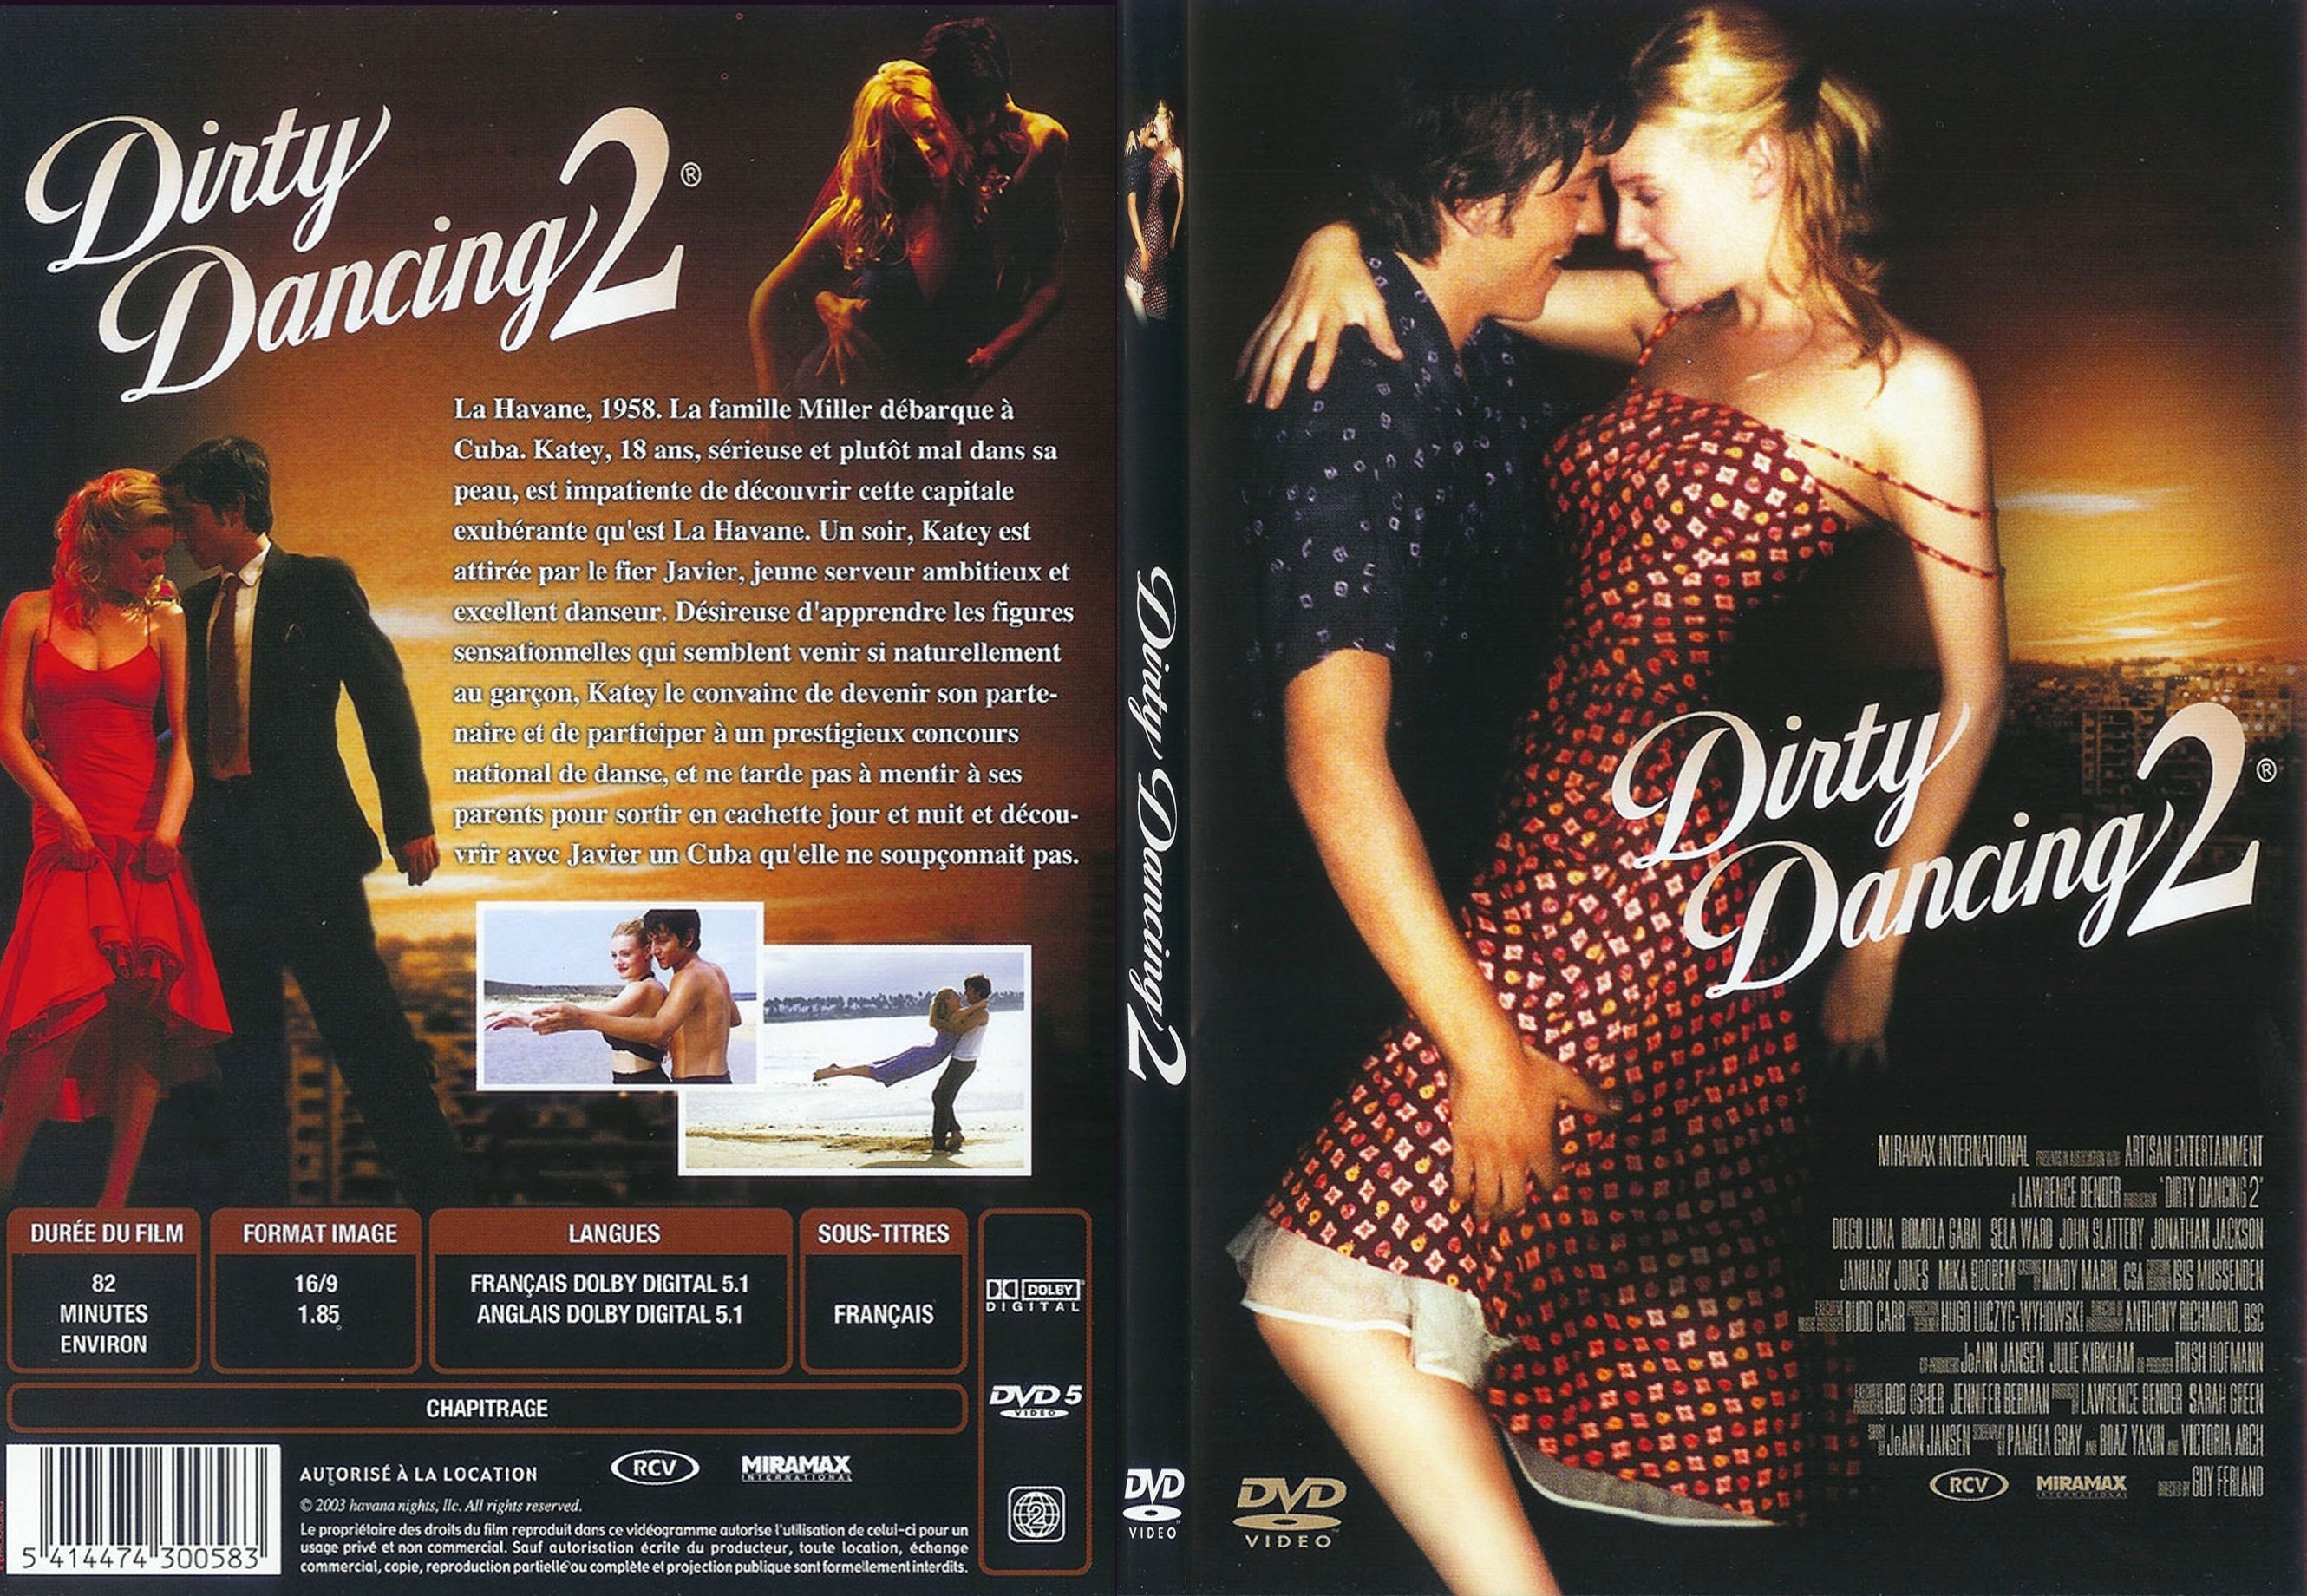 Jaquette DVD Dirty dancing 2 - SLIM